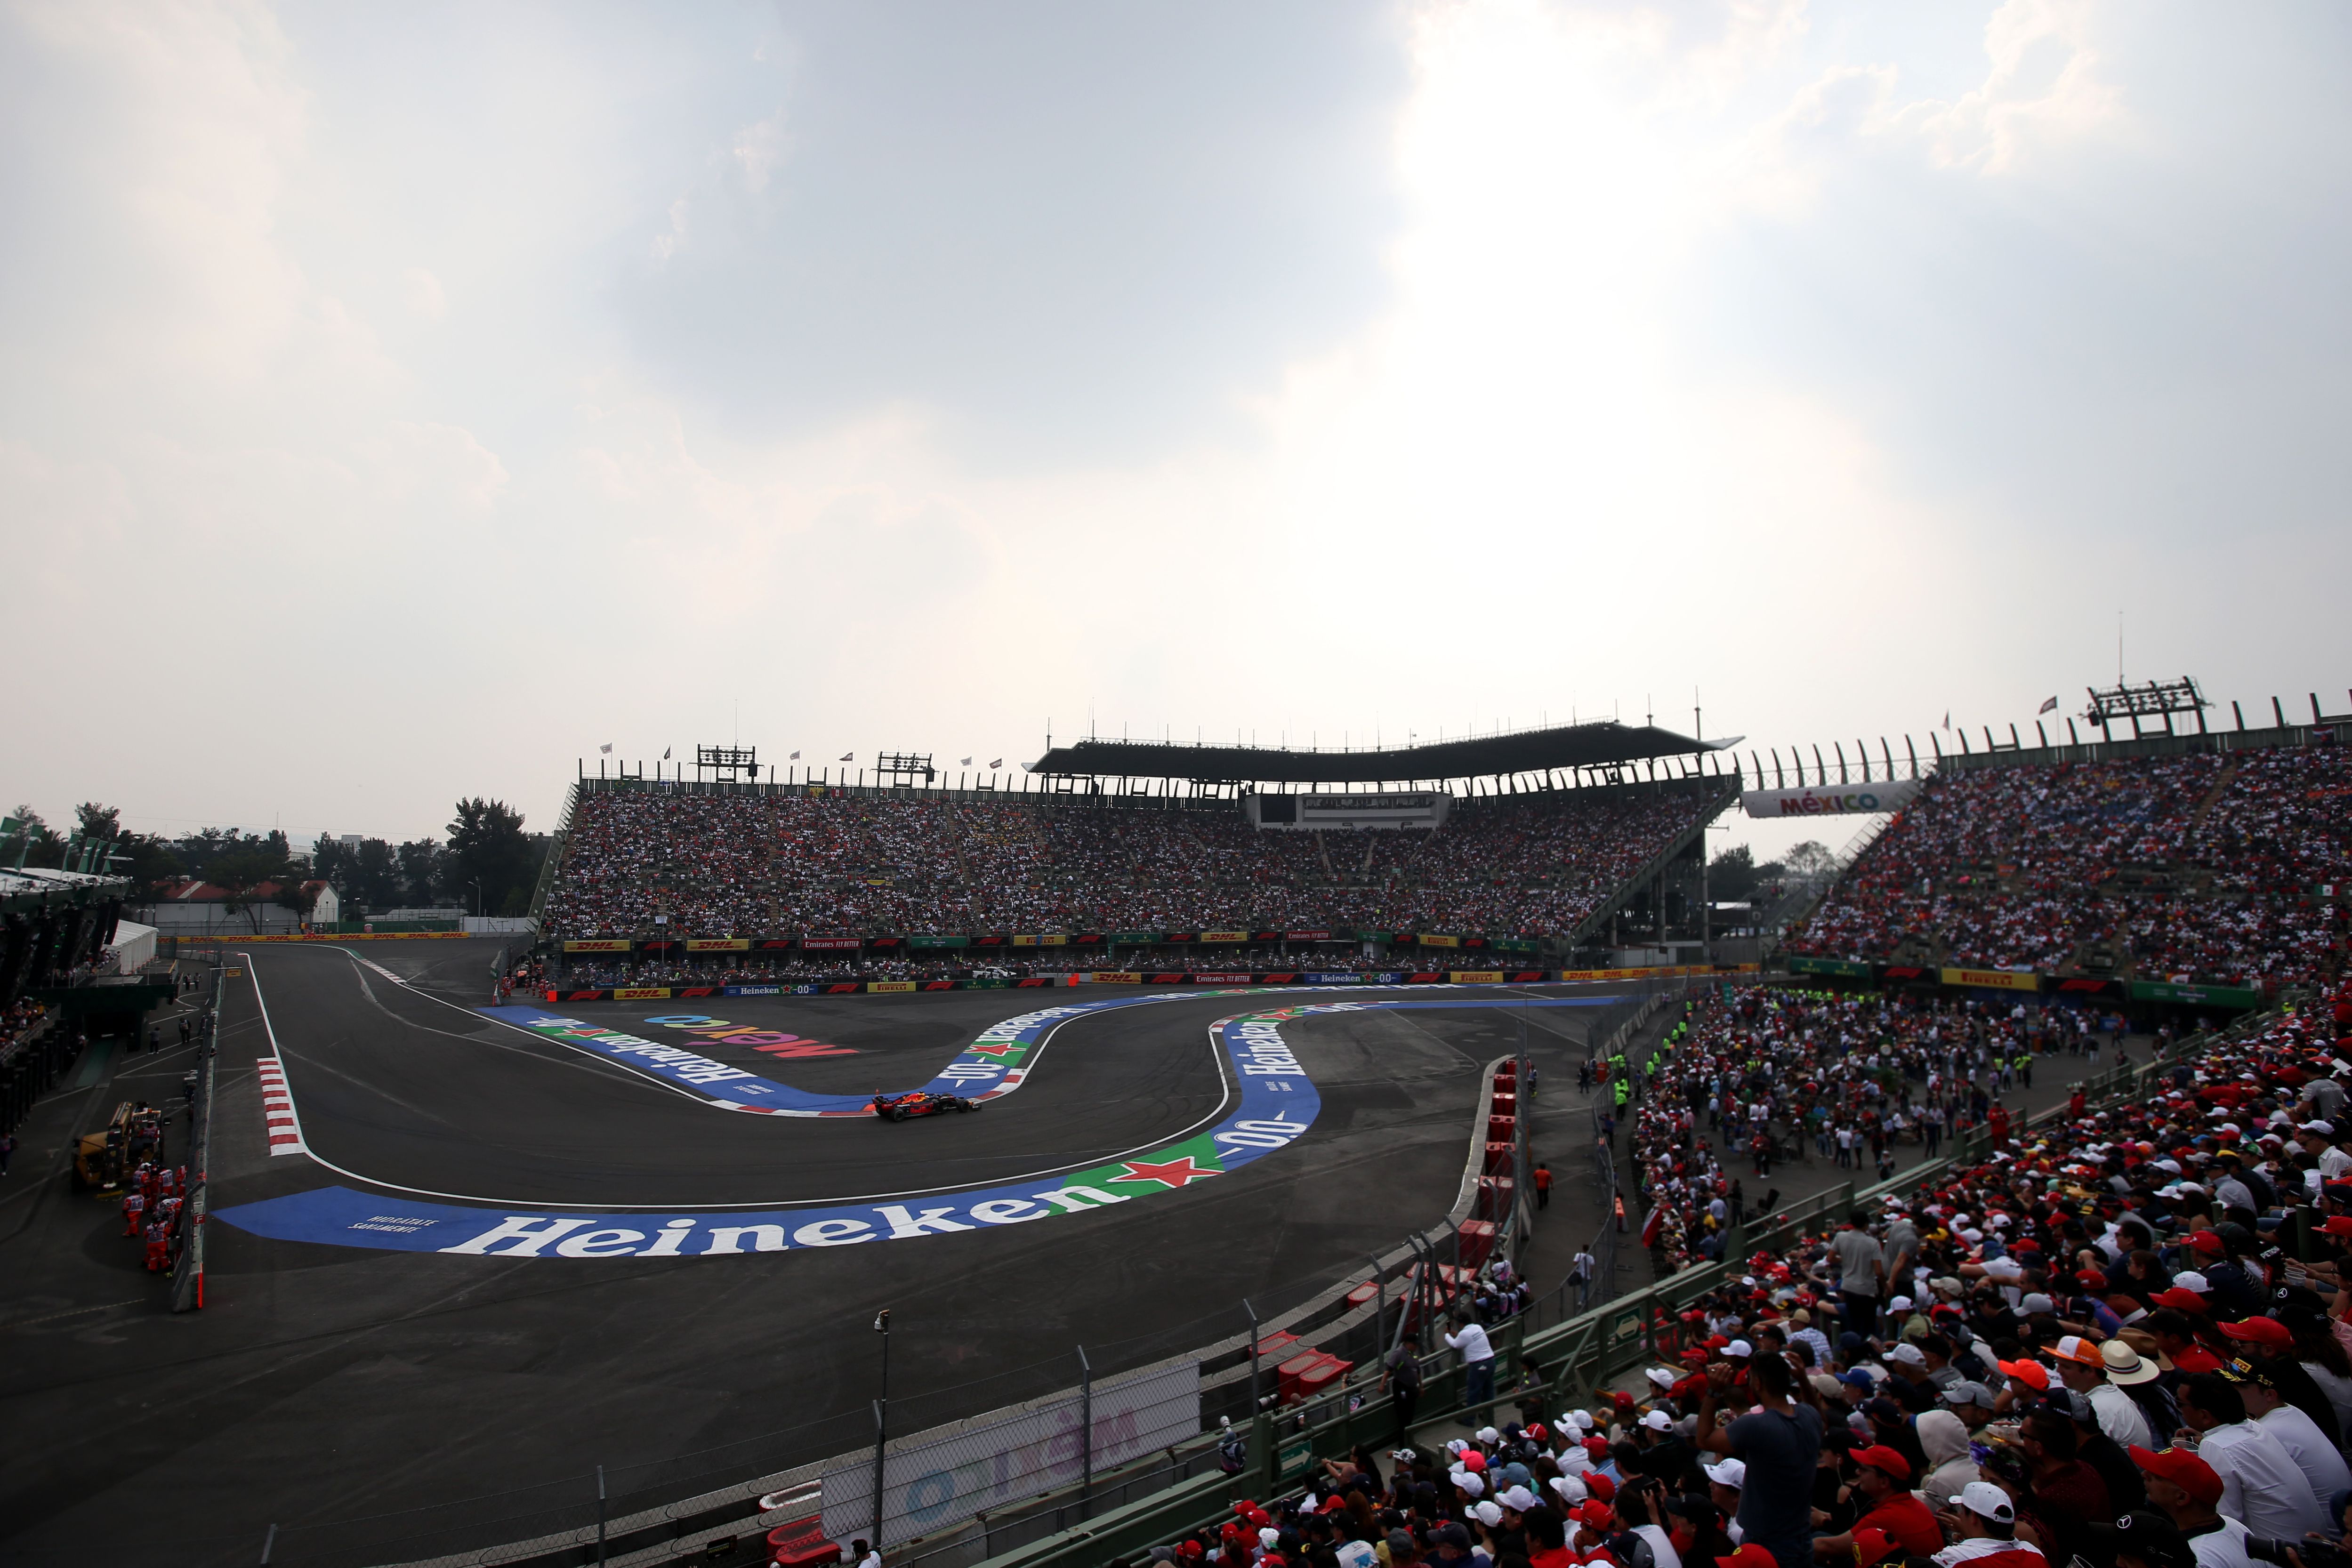 F1: Mexico track's low grip level 'crazy